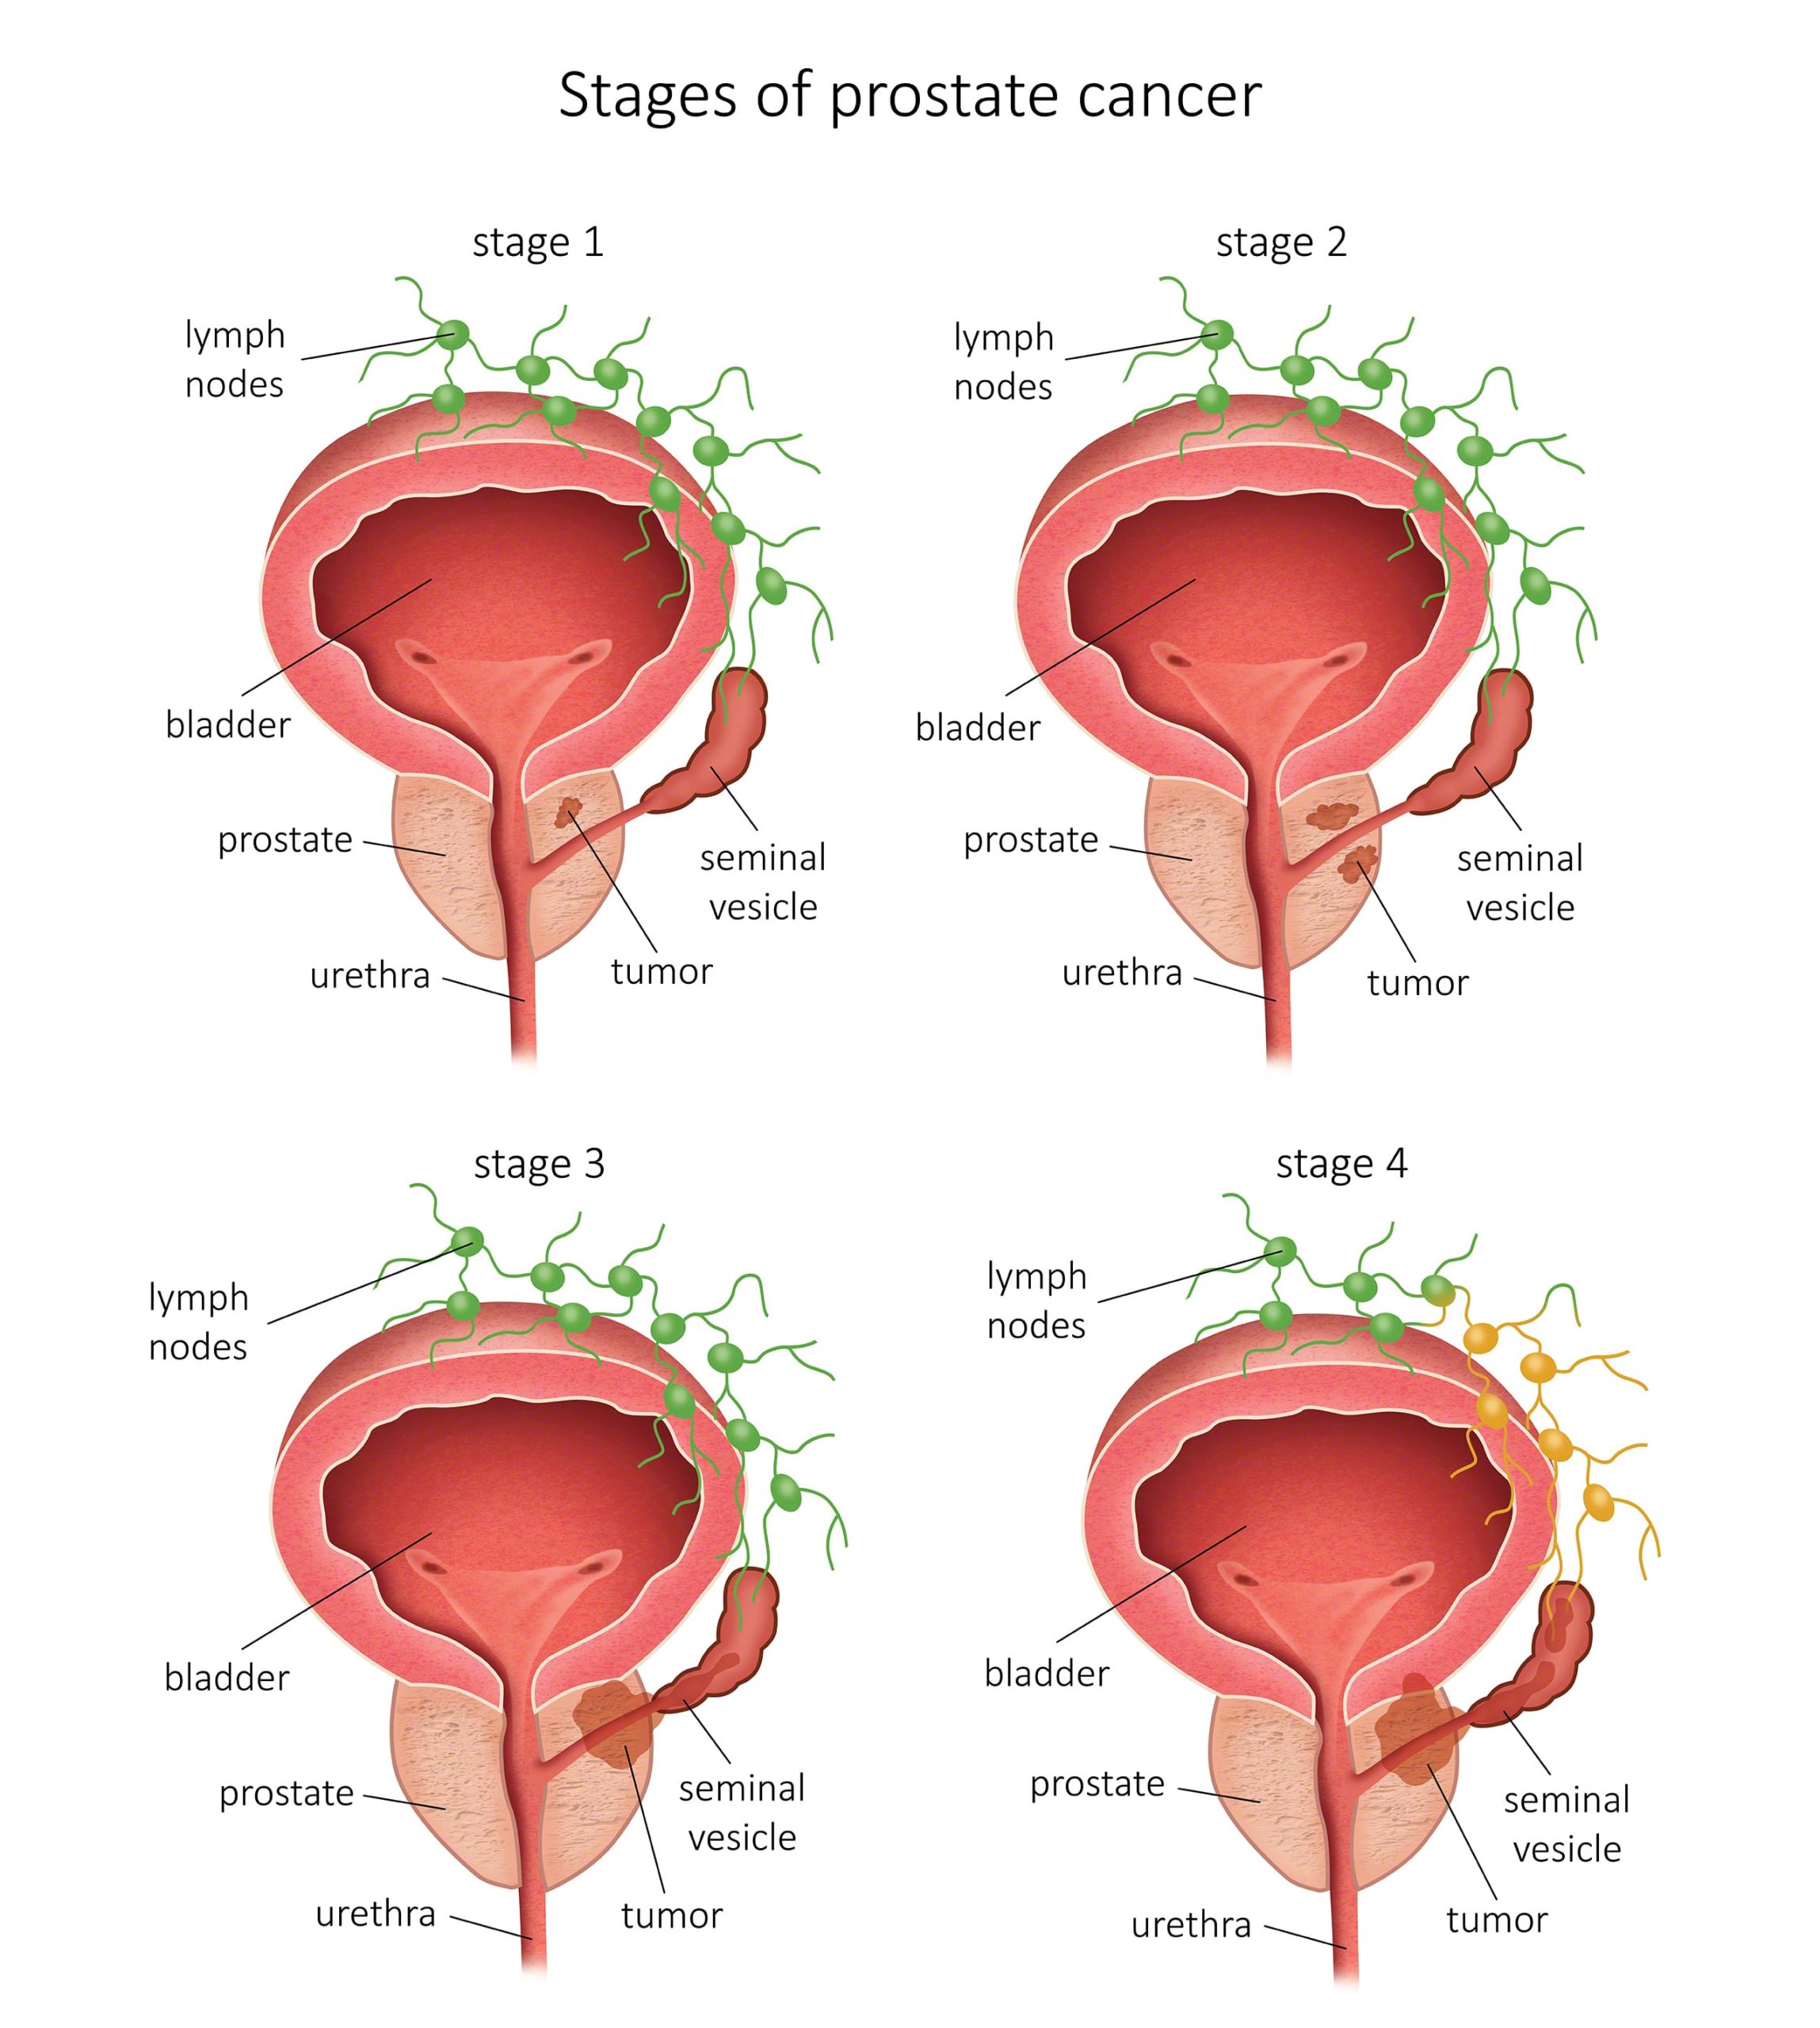 Prostate Biopsy by Transrectal Route